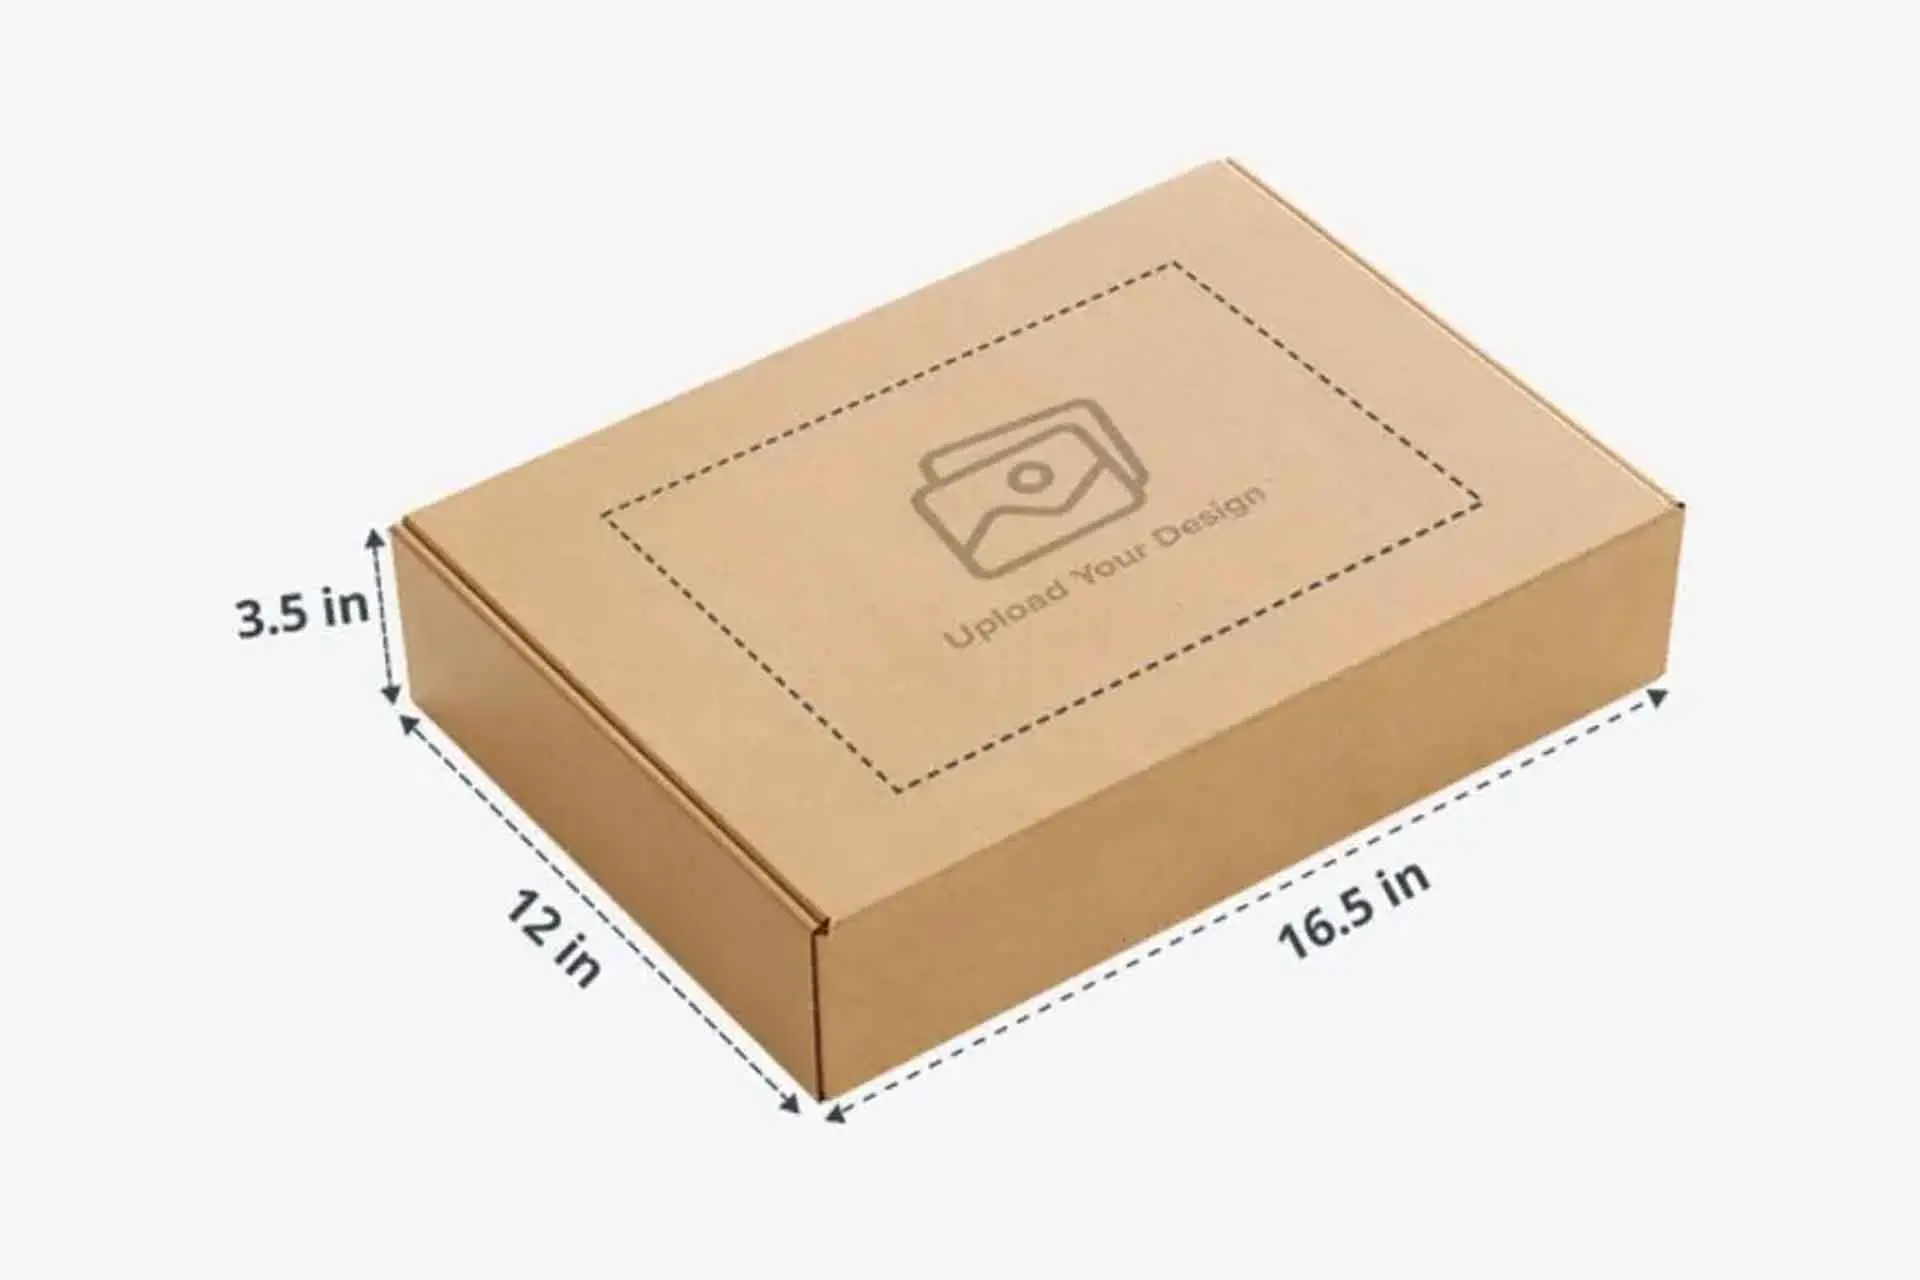 Xtra Large Flat Mailer Box